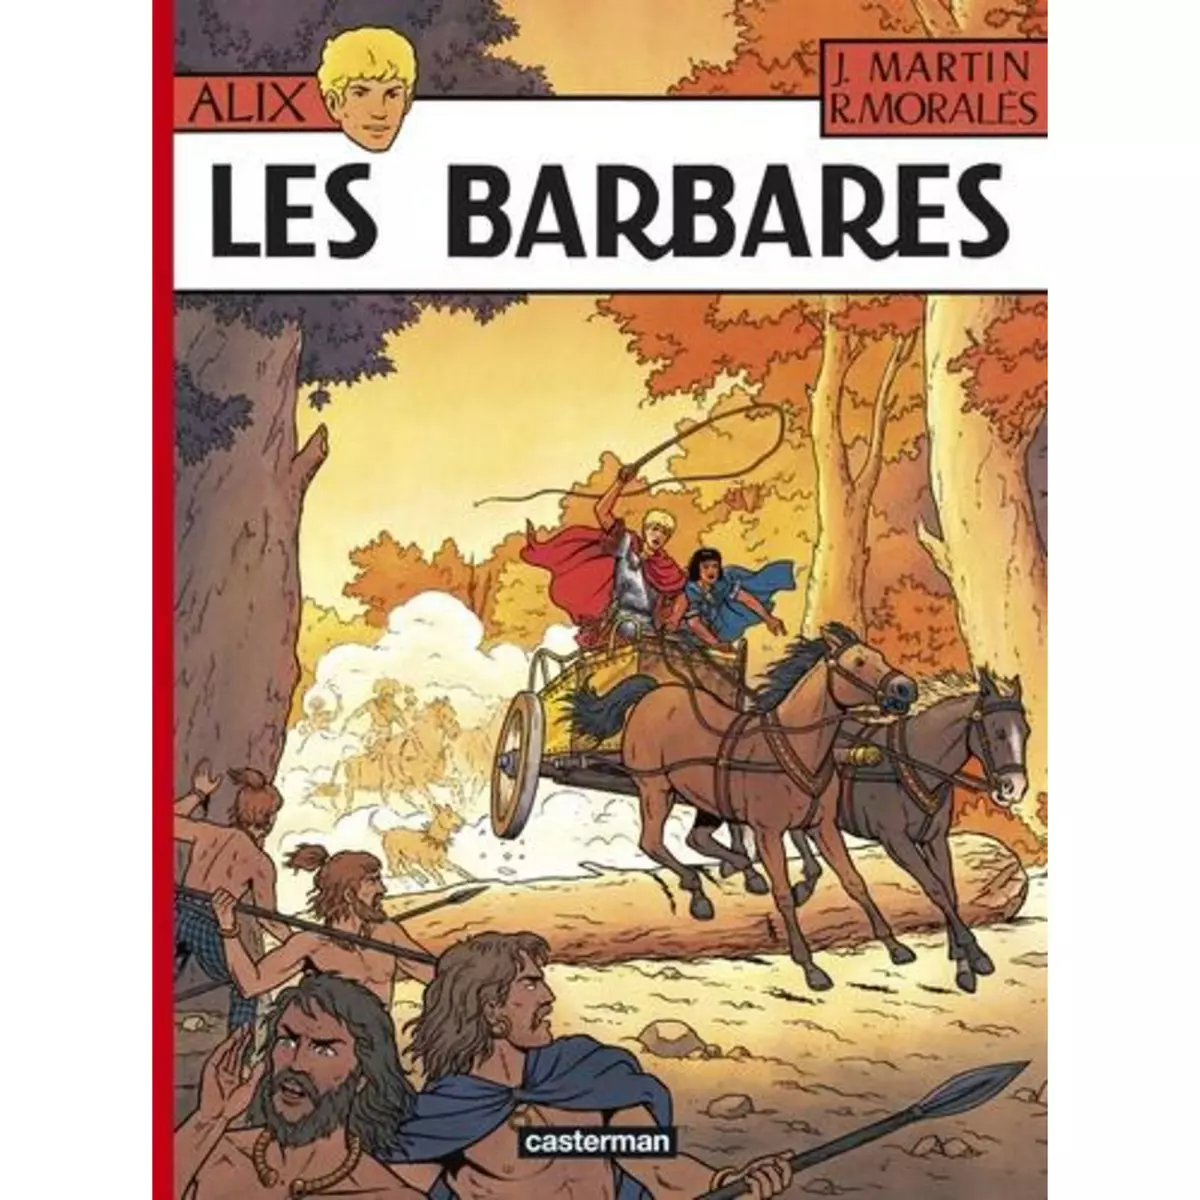  ALIX TOME 21 :  LES BARBARES, Martin Jacques